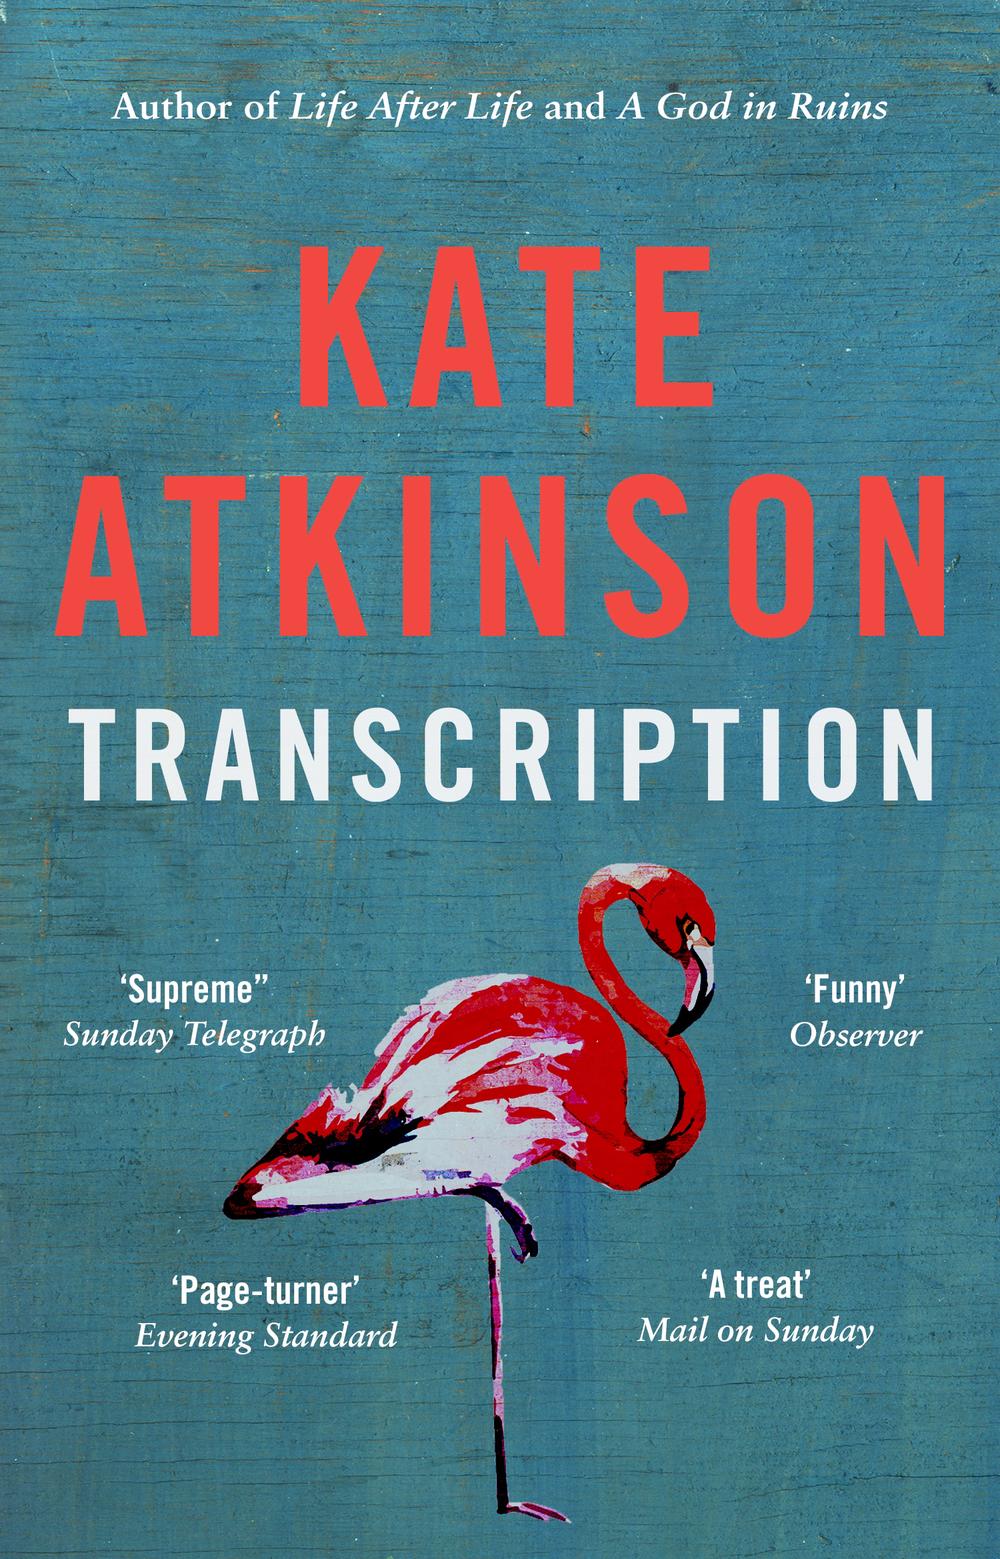 kate atkinson transcription summary